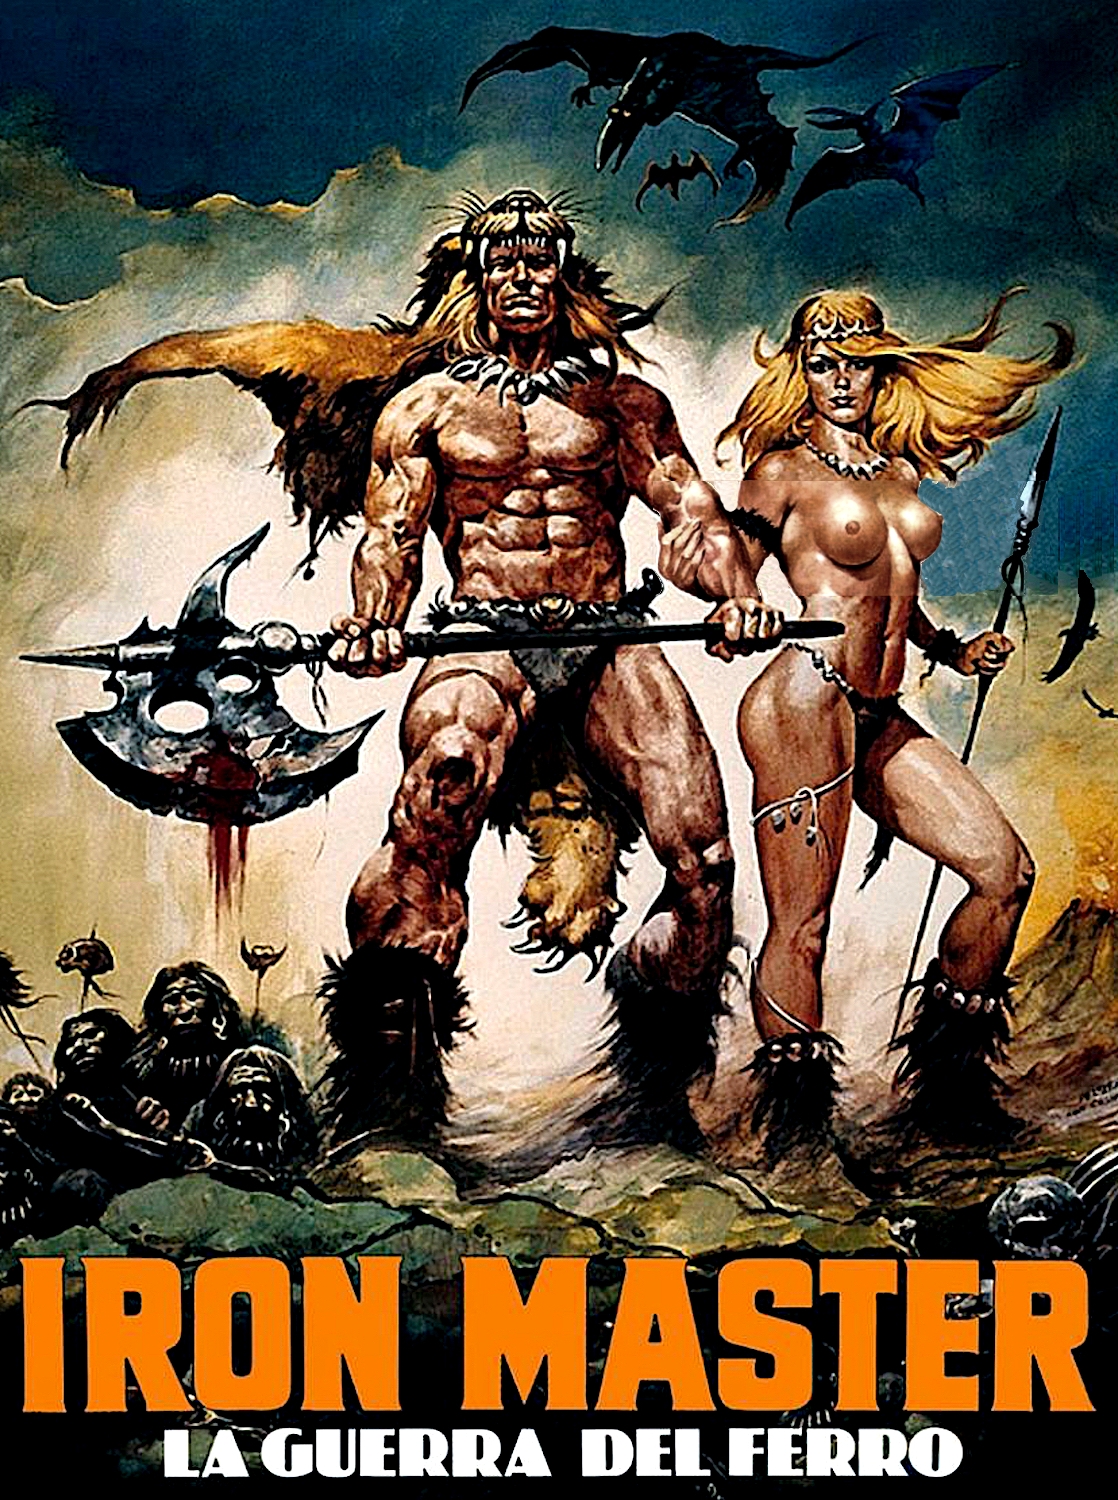 La Guerra del ferro – Ironmaster [HD] (1983)